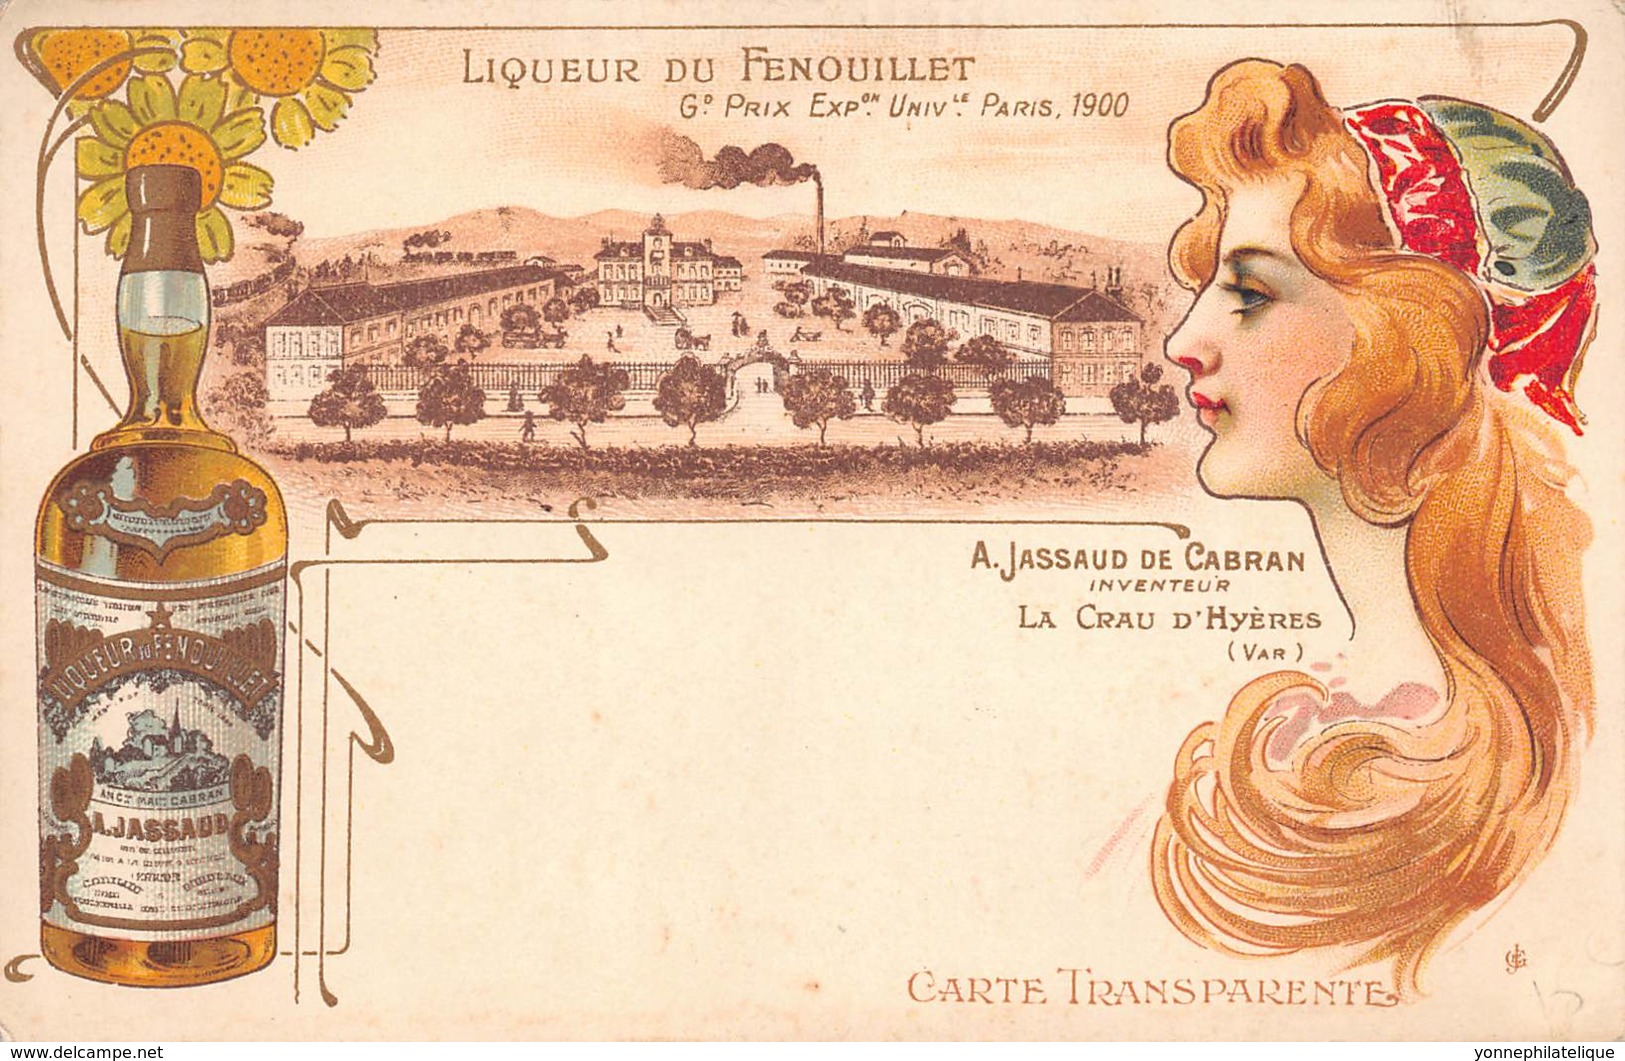 83 - VAR - LA CRAU D'HYERES - 10041 - Carte Transparente Fenouillet Liqueur De Prestige-grande Marque Inventée En 1840 - La Crau